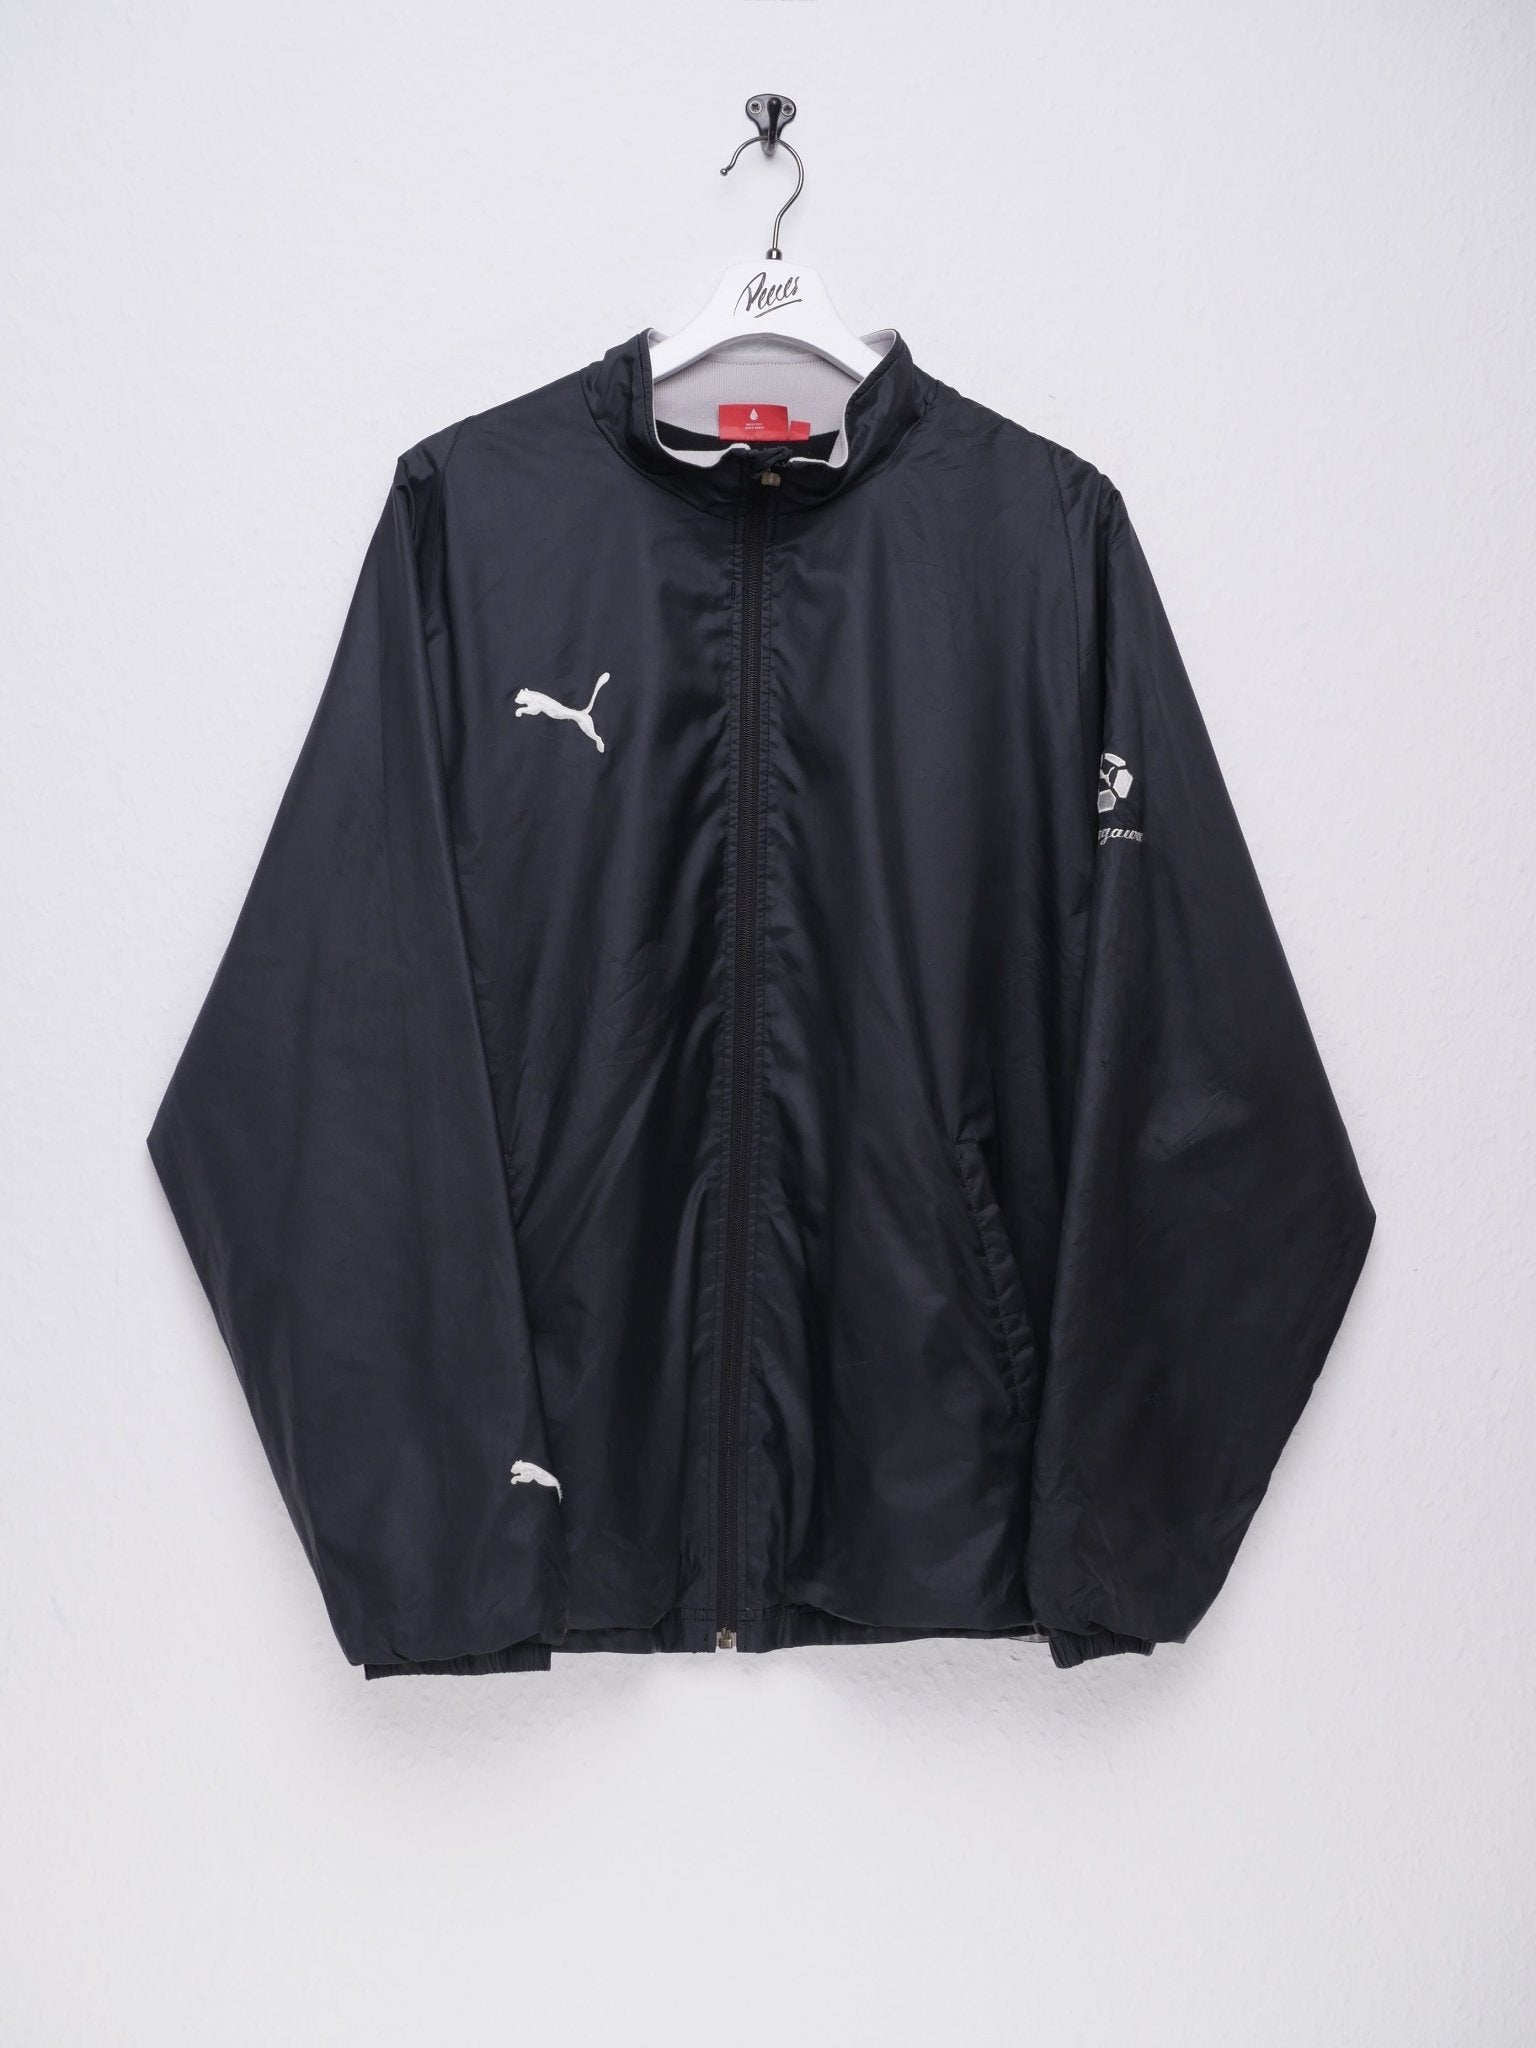 puma Soccer embroidered Logo black Track Jacket - Peeces